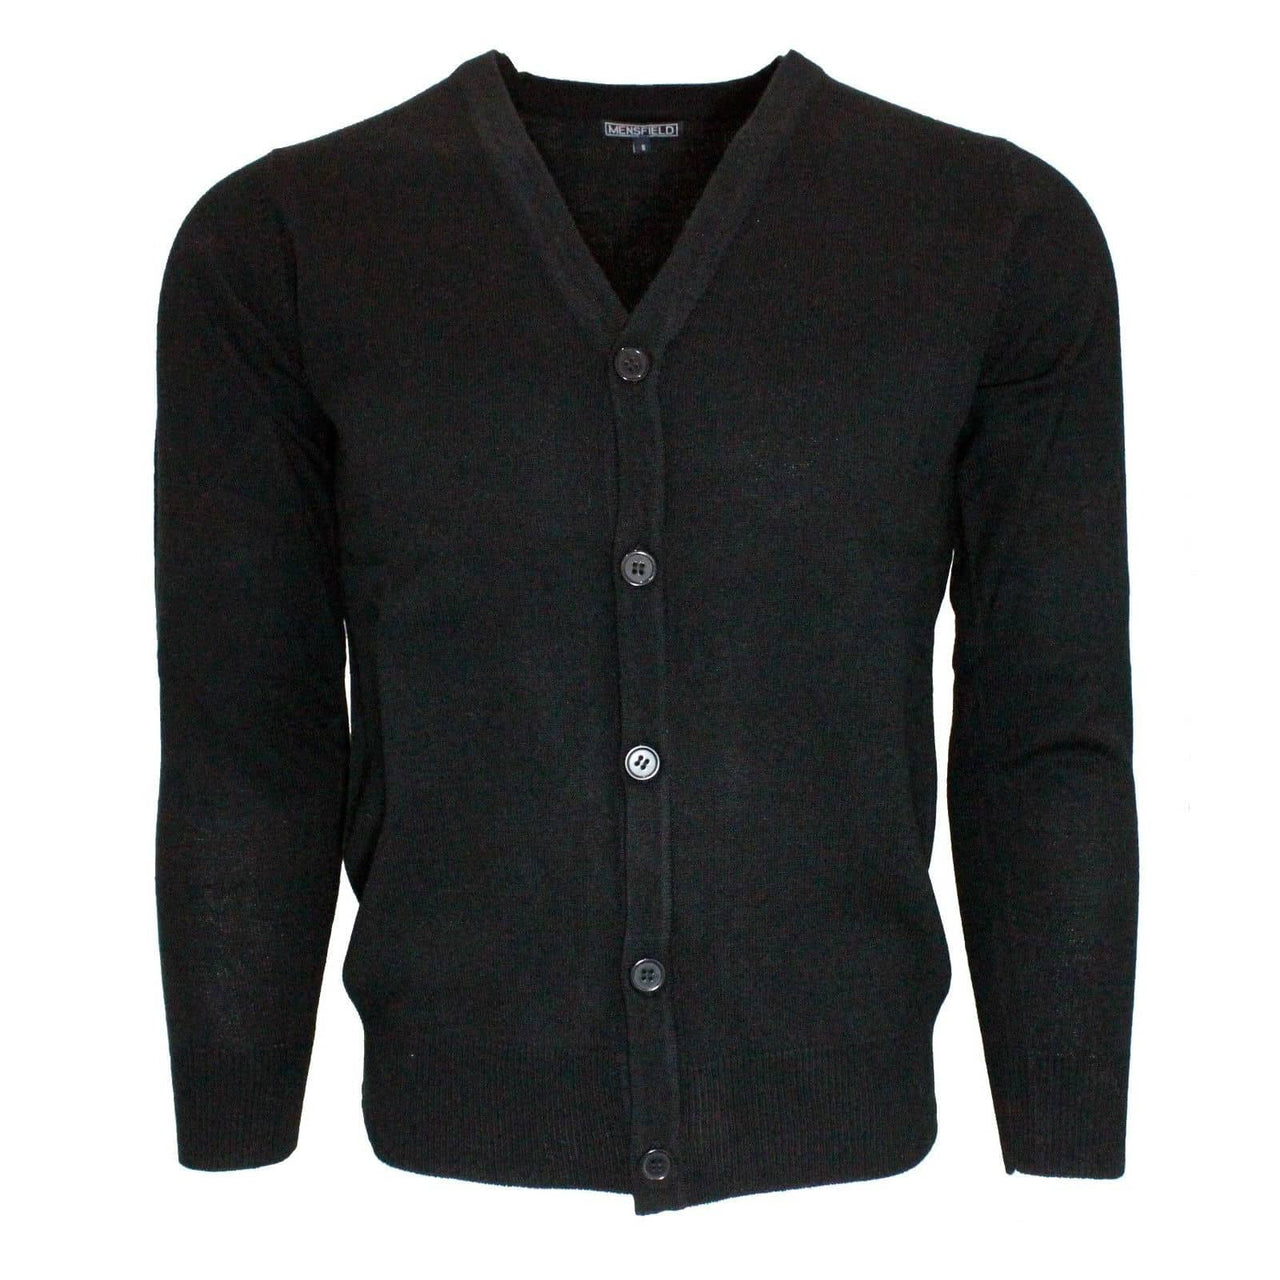 Black V-Neck Cardigan Sweater